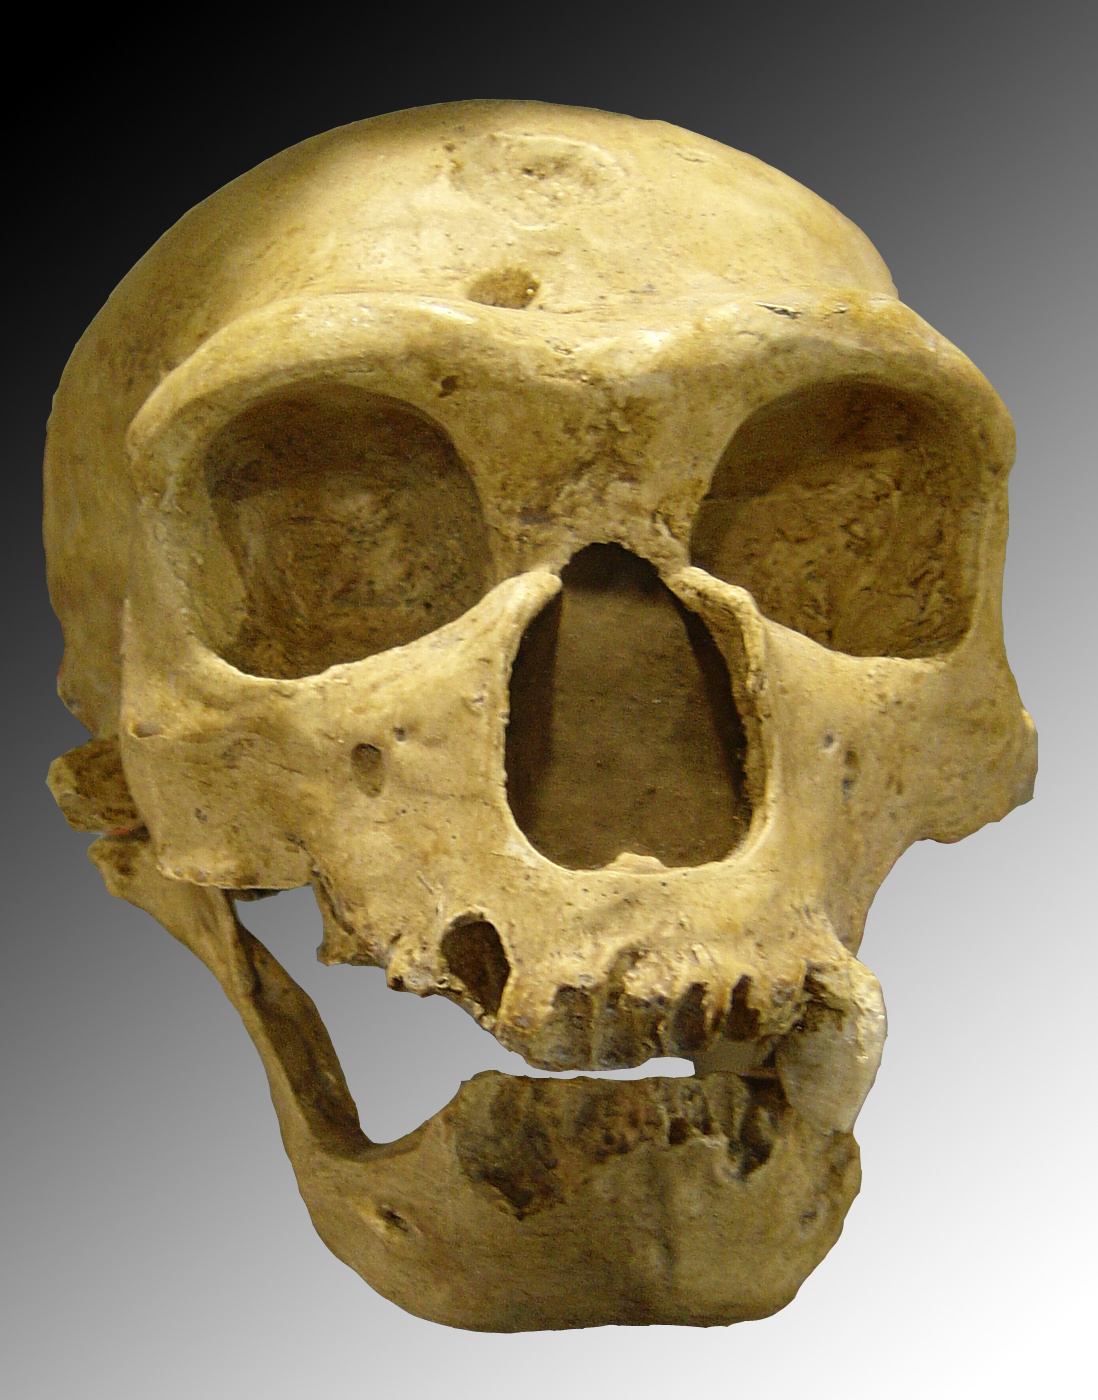 Cráneo de Neandertal descubierto en La Chapelle-aux-Saints (France). Imagen: Luna04. Fuente: Wikipedia.